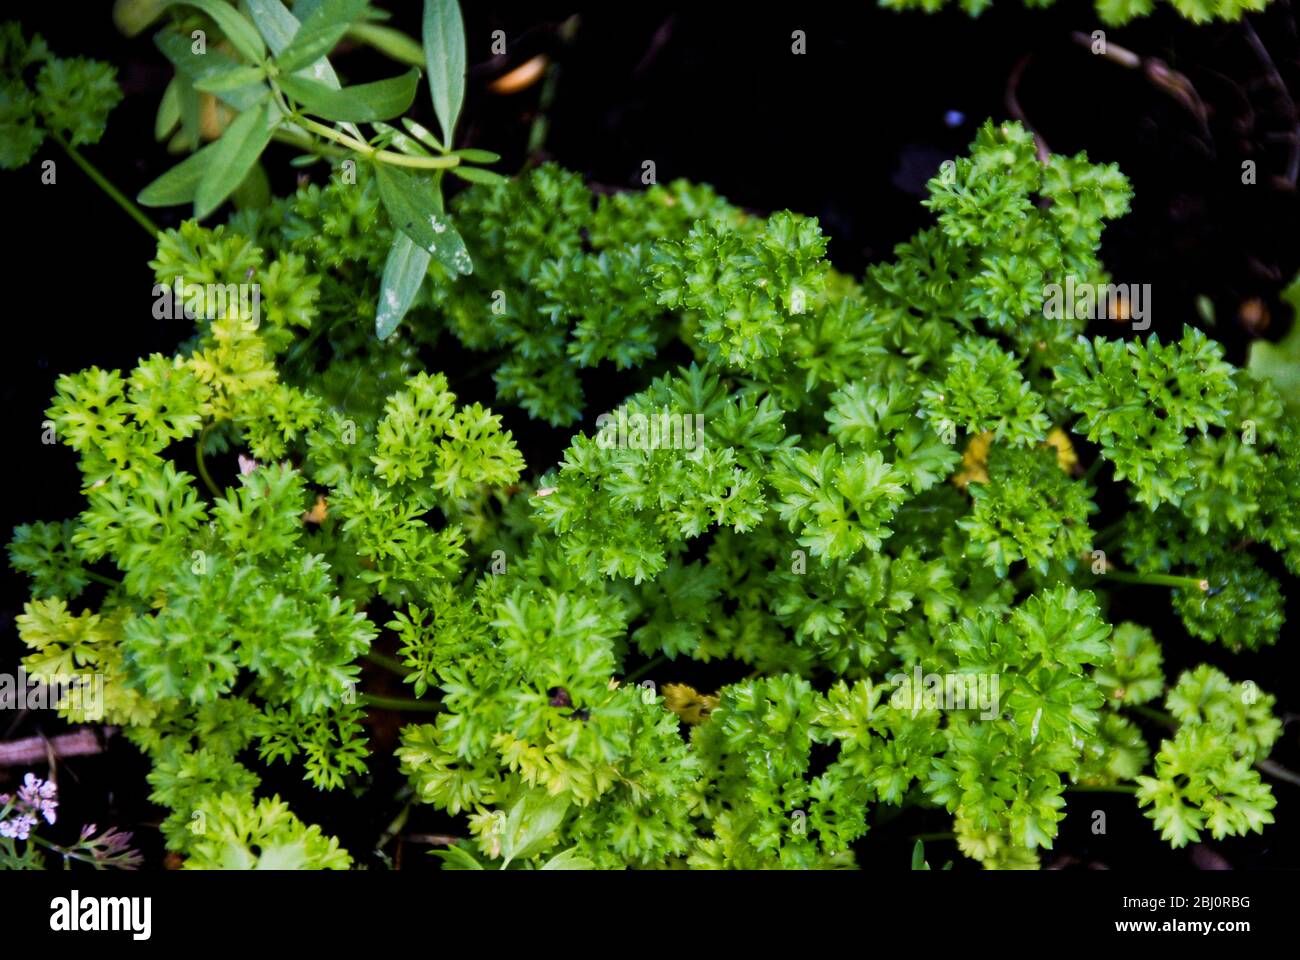 Curly parsley growing in dark soil - Stock Photo